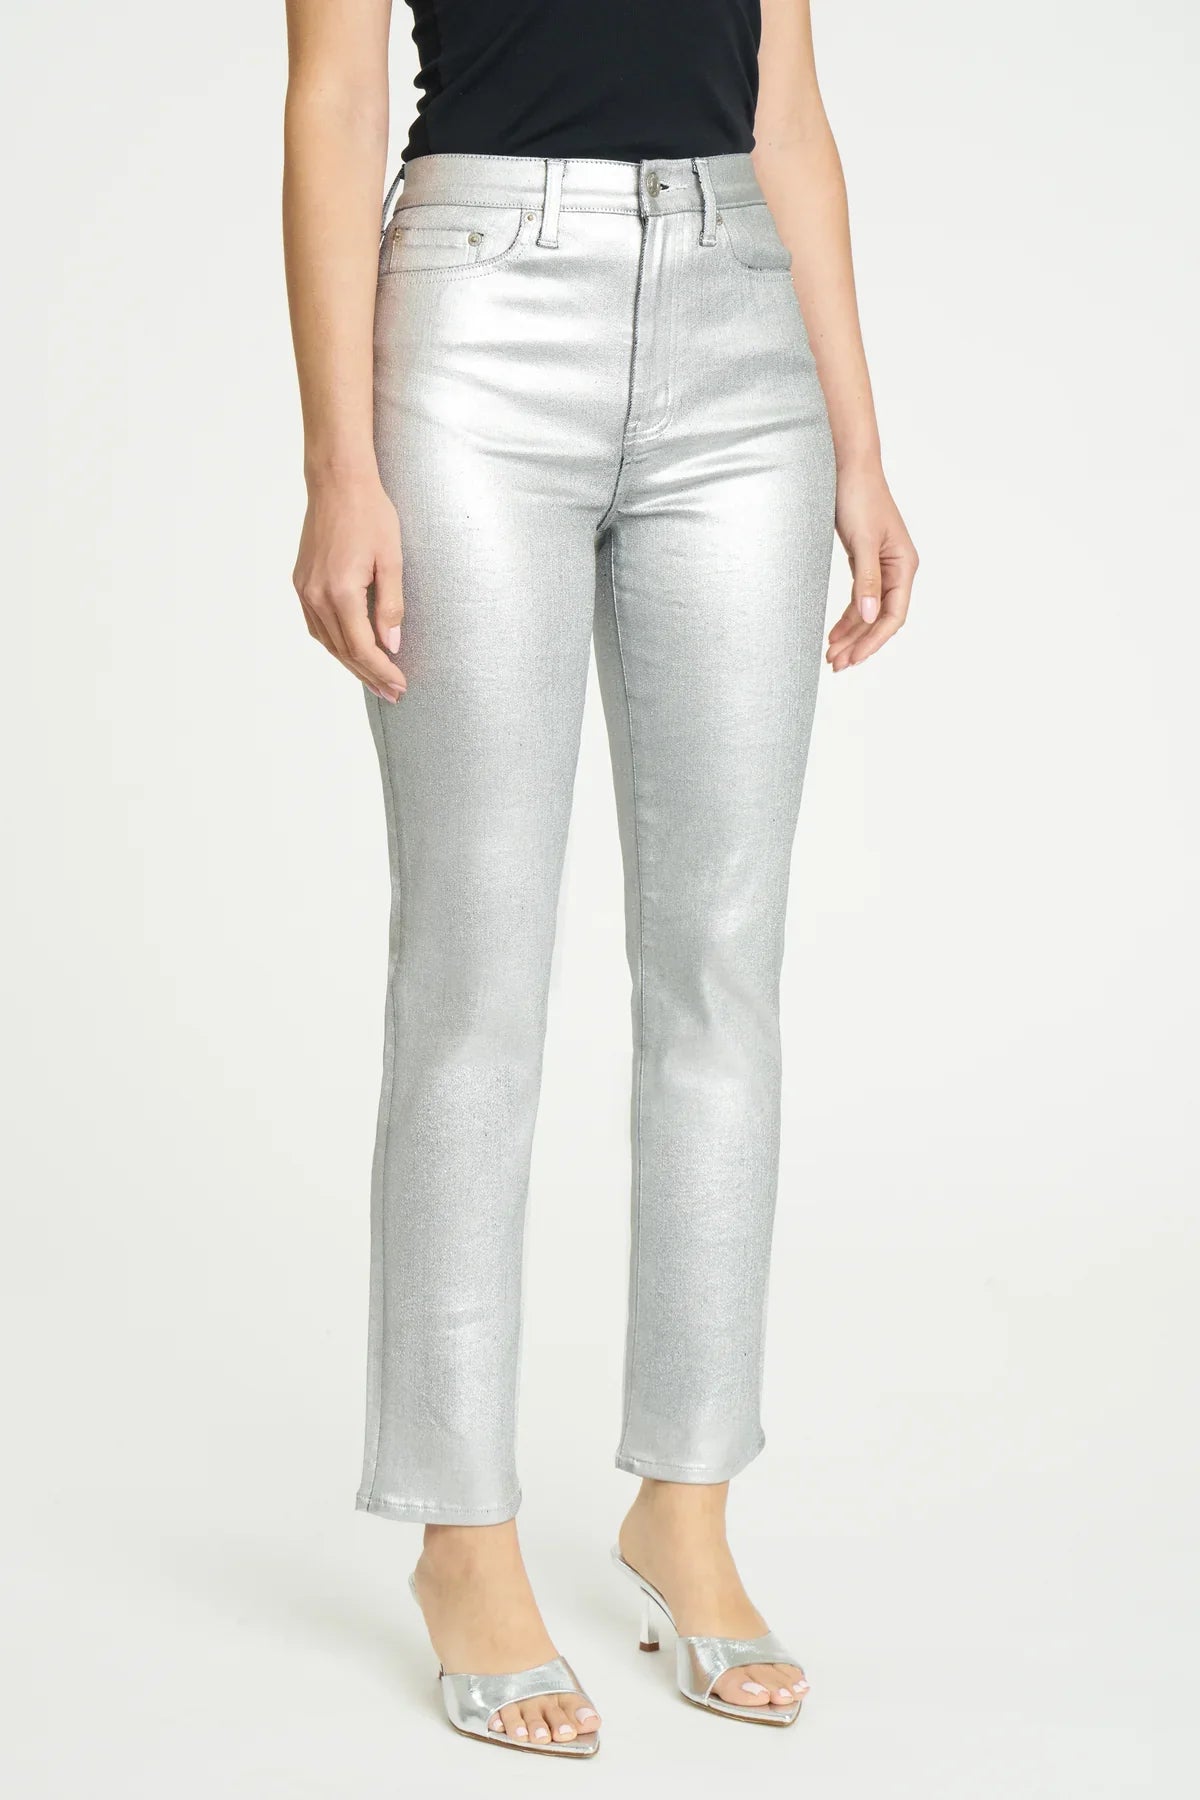 Simon Miller Silver Foil High Waist Ankle Trouser Jeans - ShopStyle